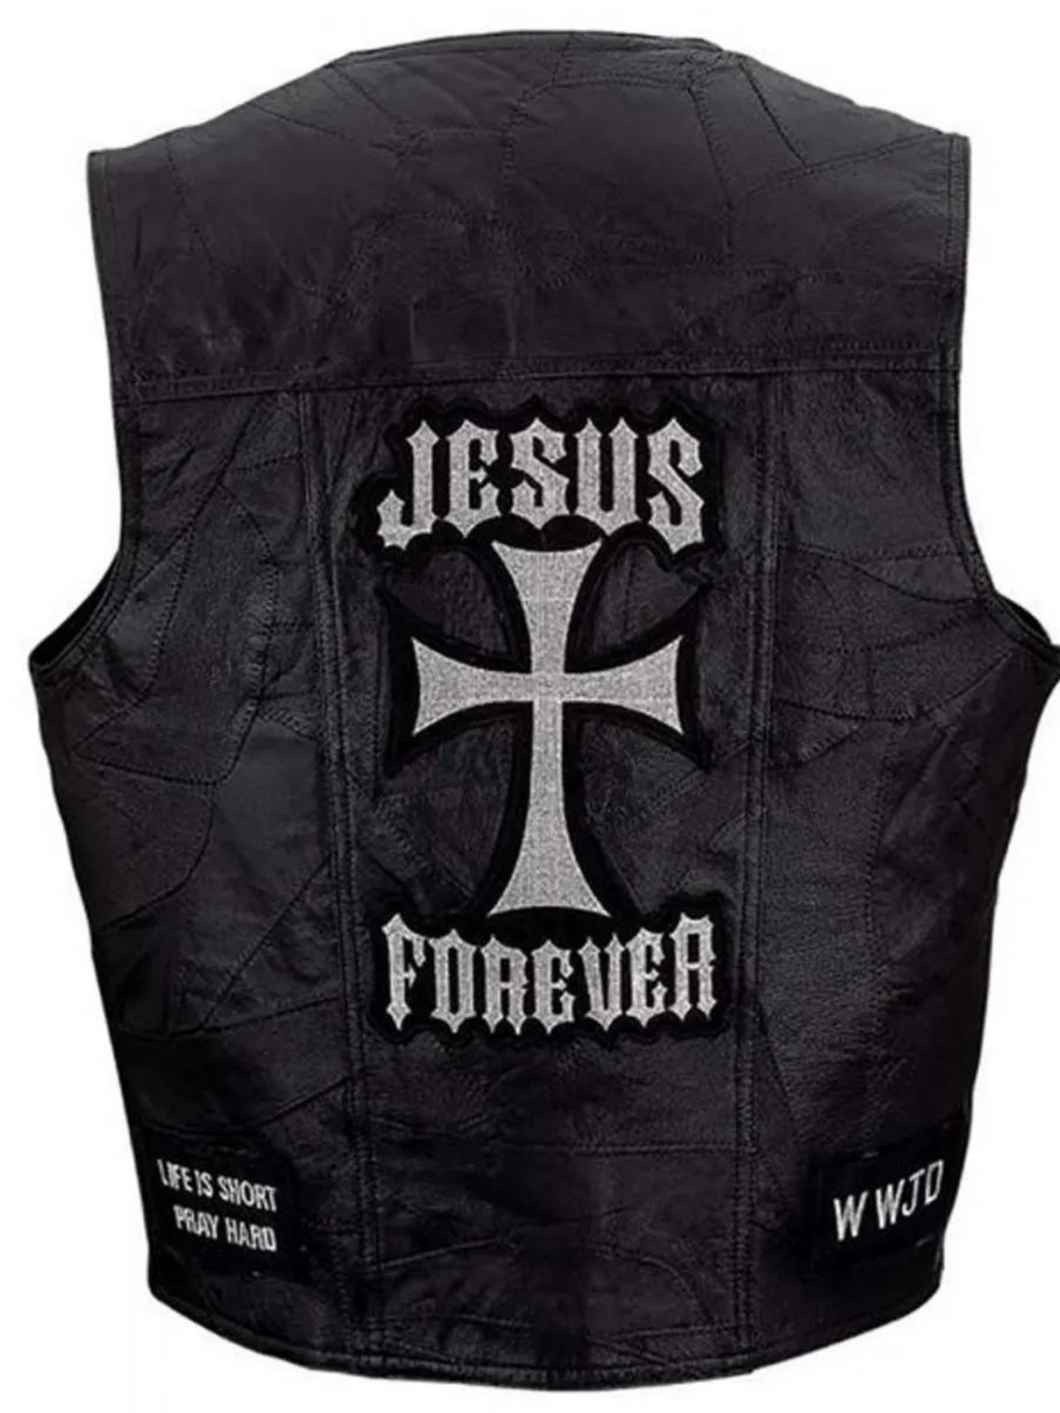 Jesus Forever Christian Motorcycle Black Leather Vest